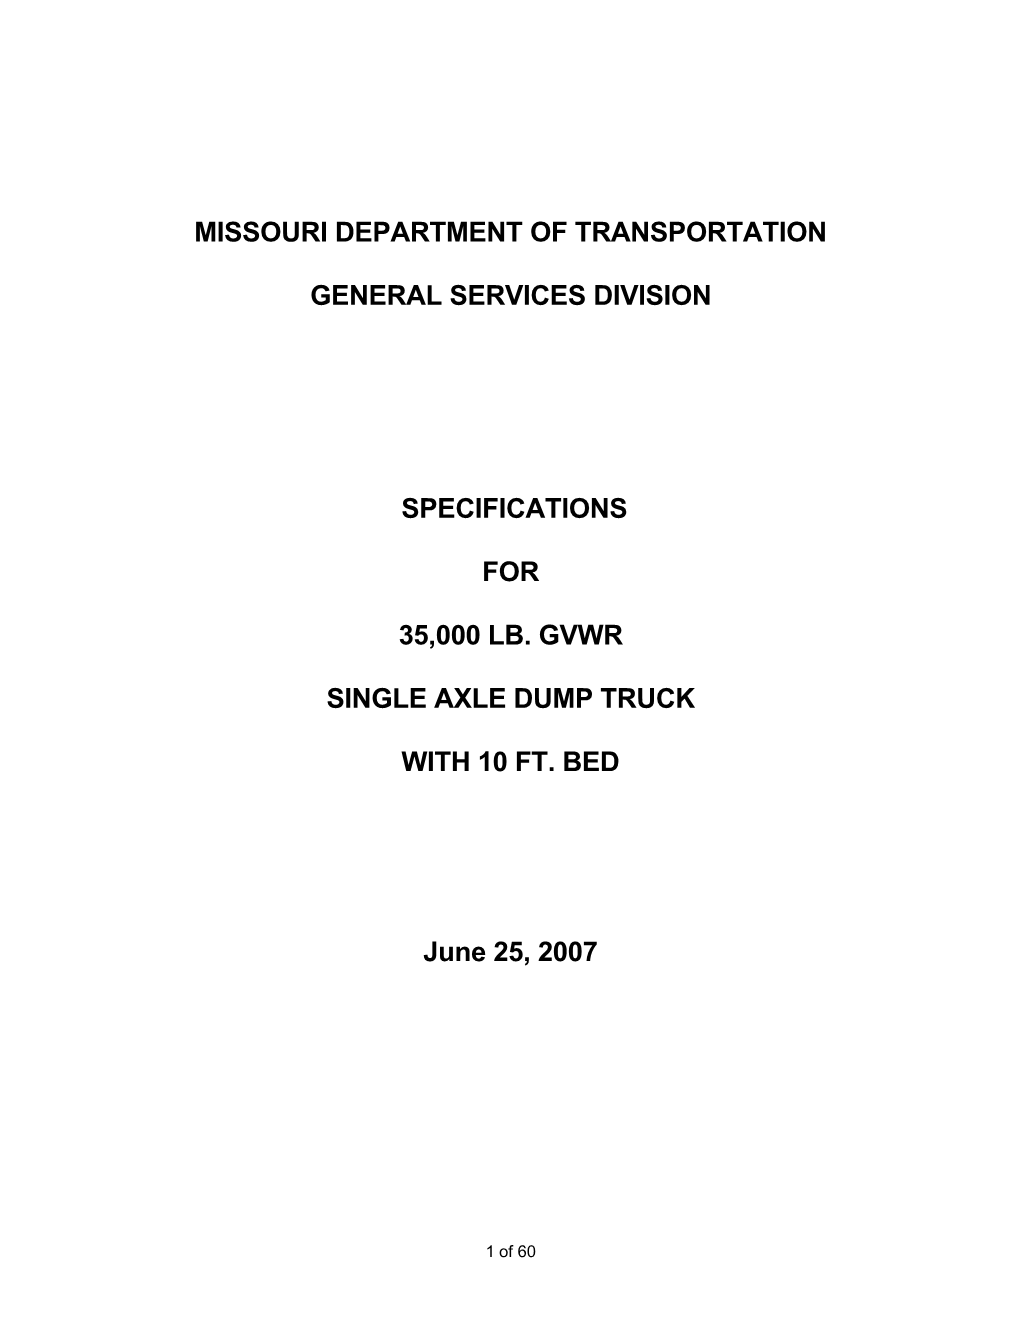 Missouri Department of Transportation s3